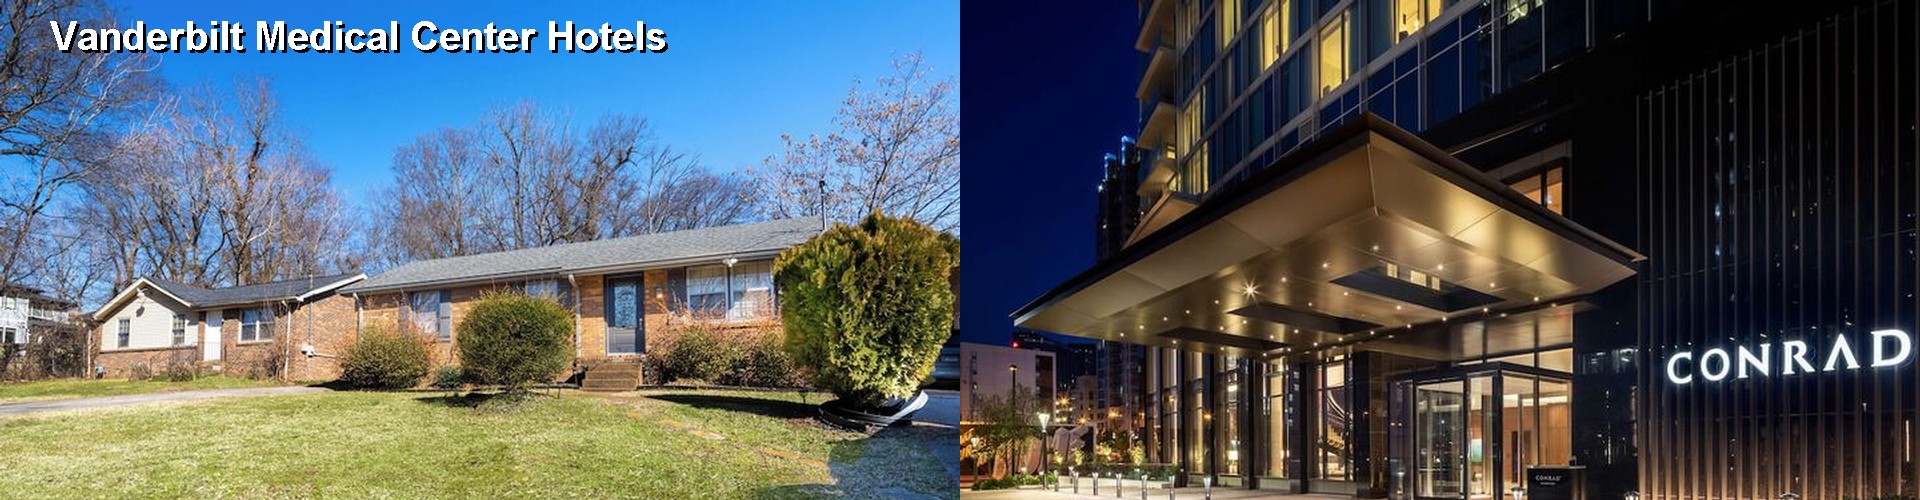 5 Best Hotels near Vanderbilt Medical Center